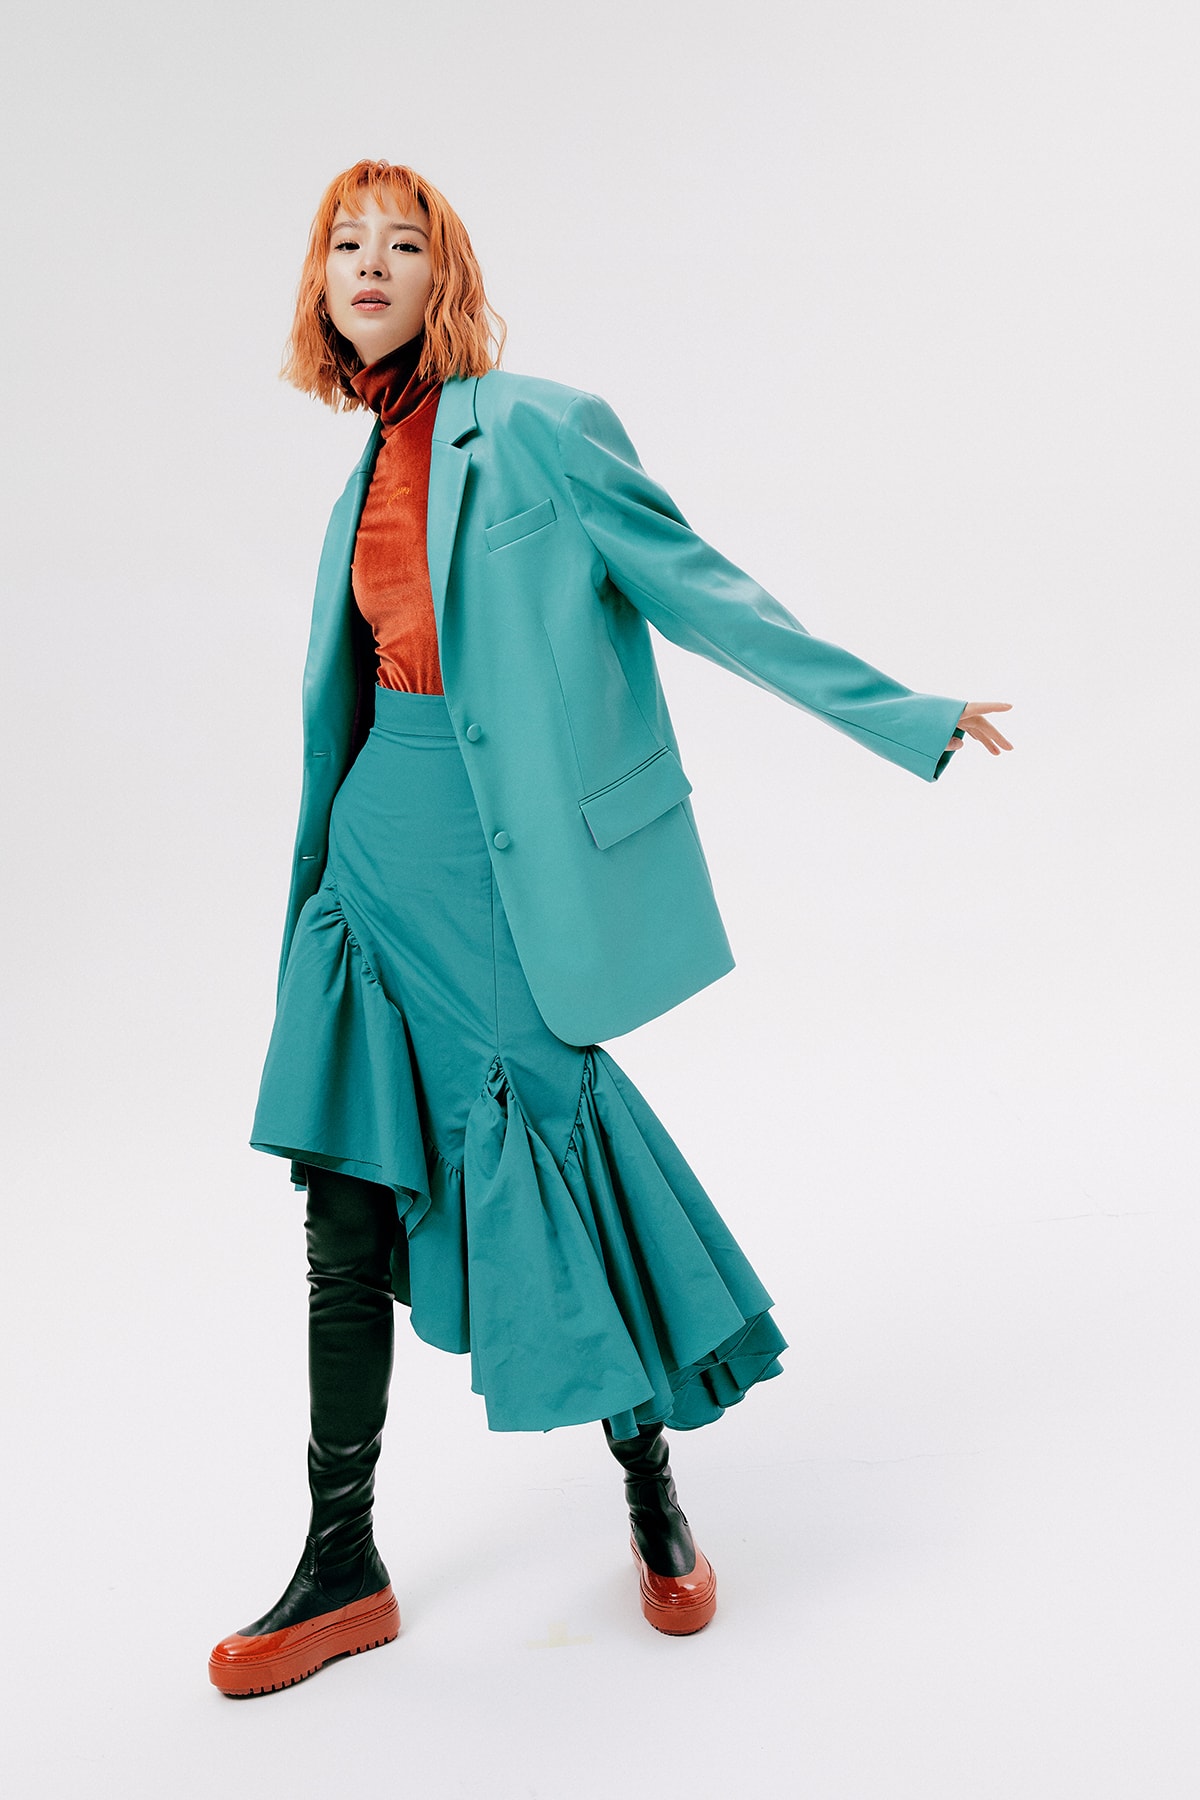 IRENEISGOOD Label Fall/Winter 2020 Collection Lookbook Jacket Ruffle Skirt Teal